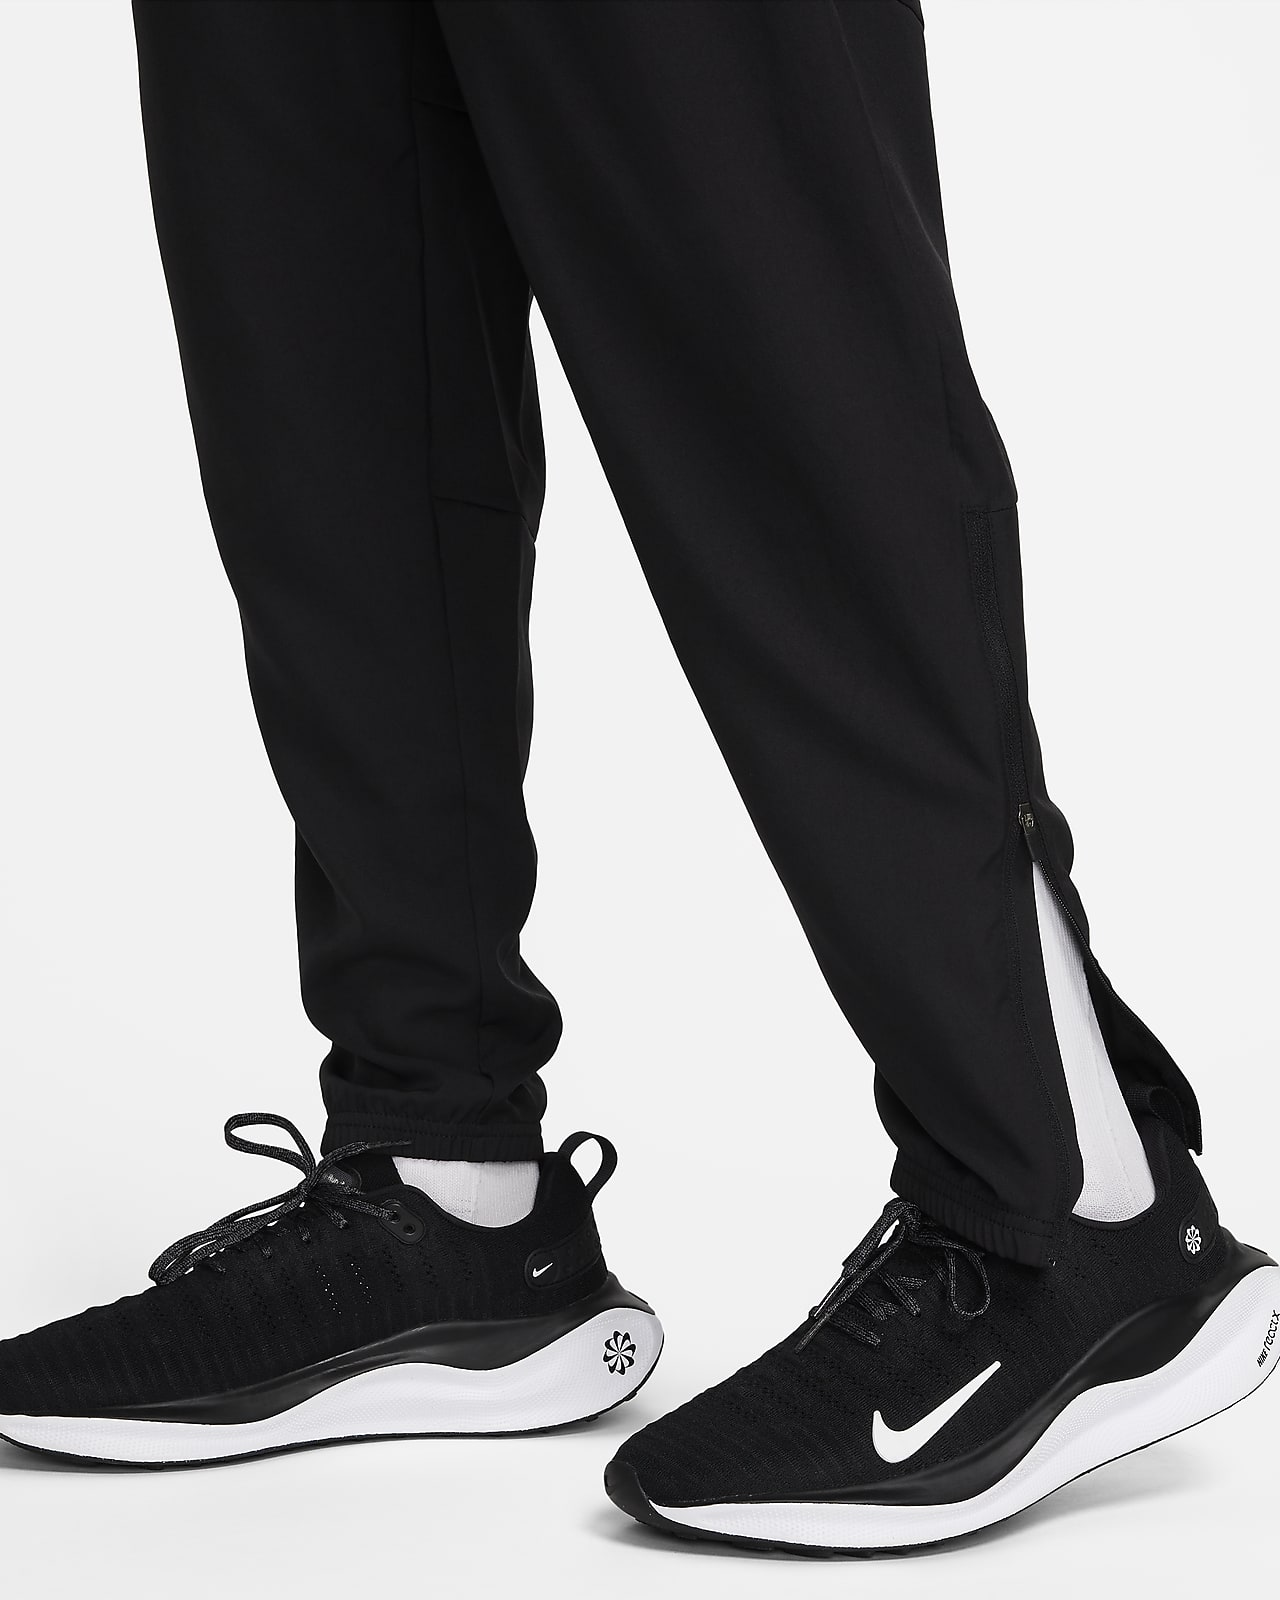 Calça Masculina Nike Dri-Fit Pant Epic Knit em Promoção